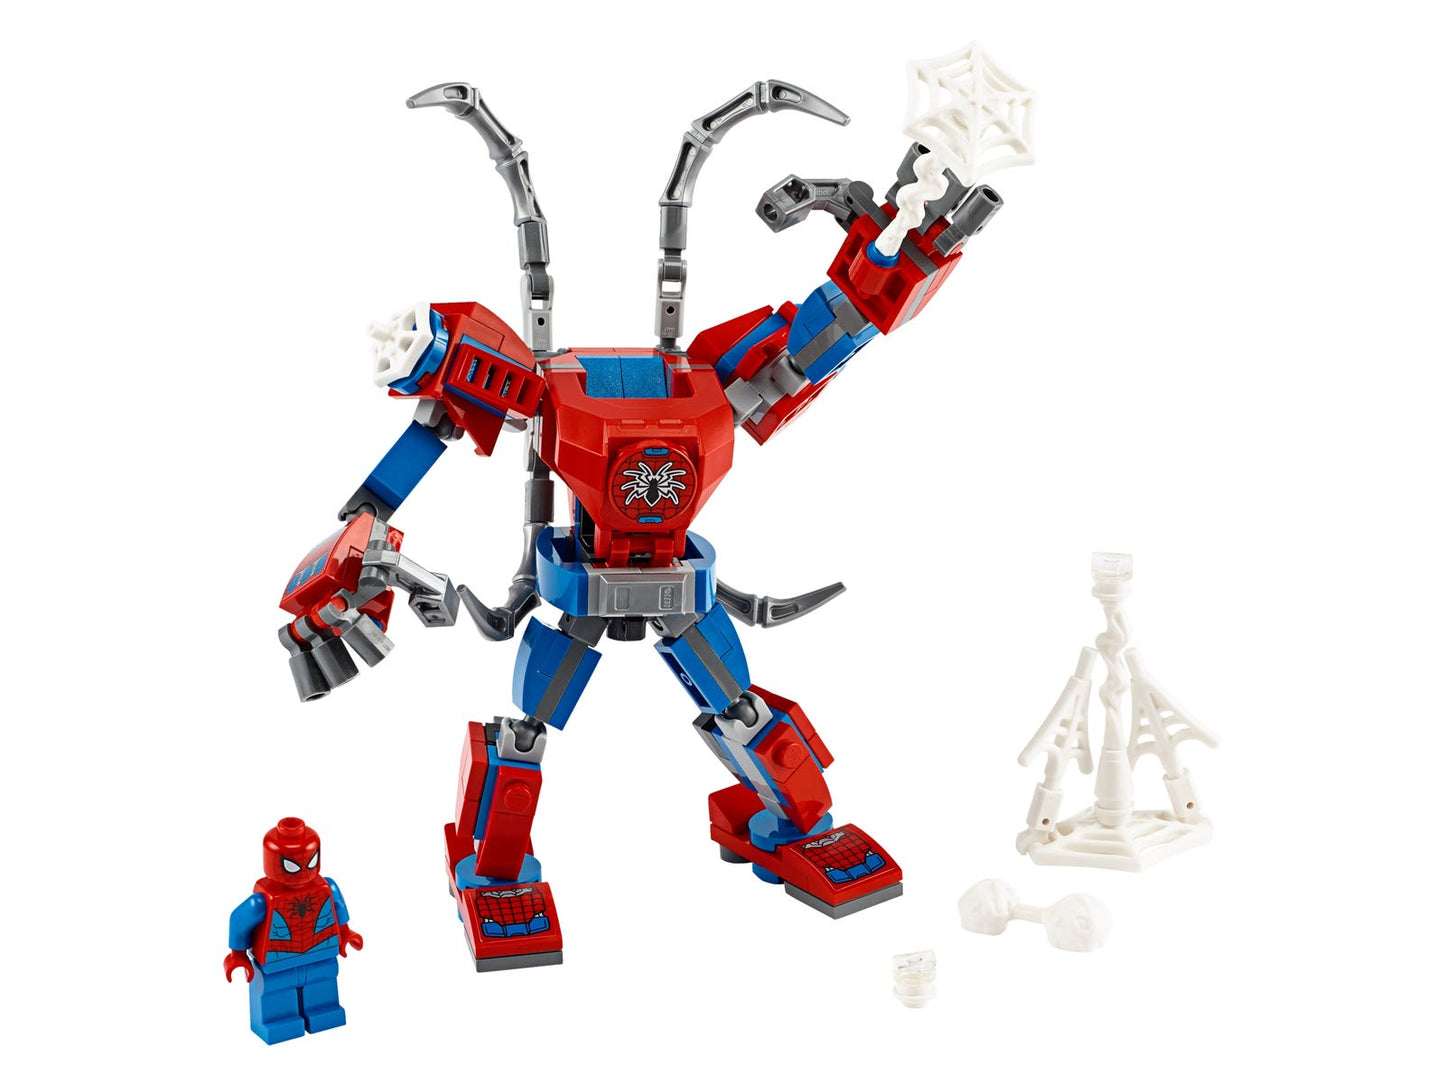 Lego Marvel Spiderman Mech 76146